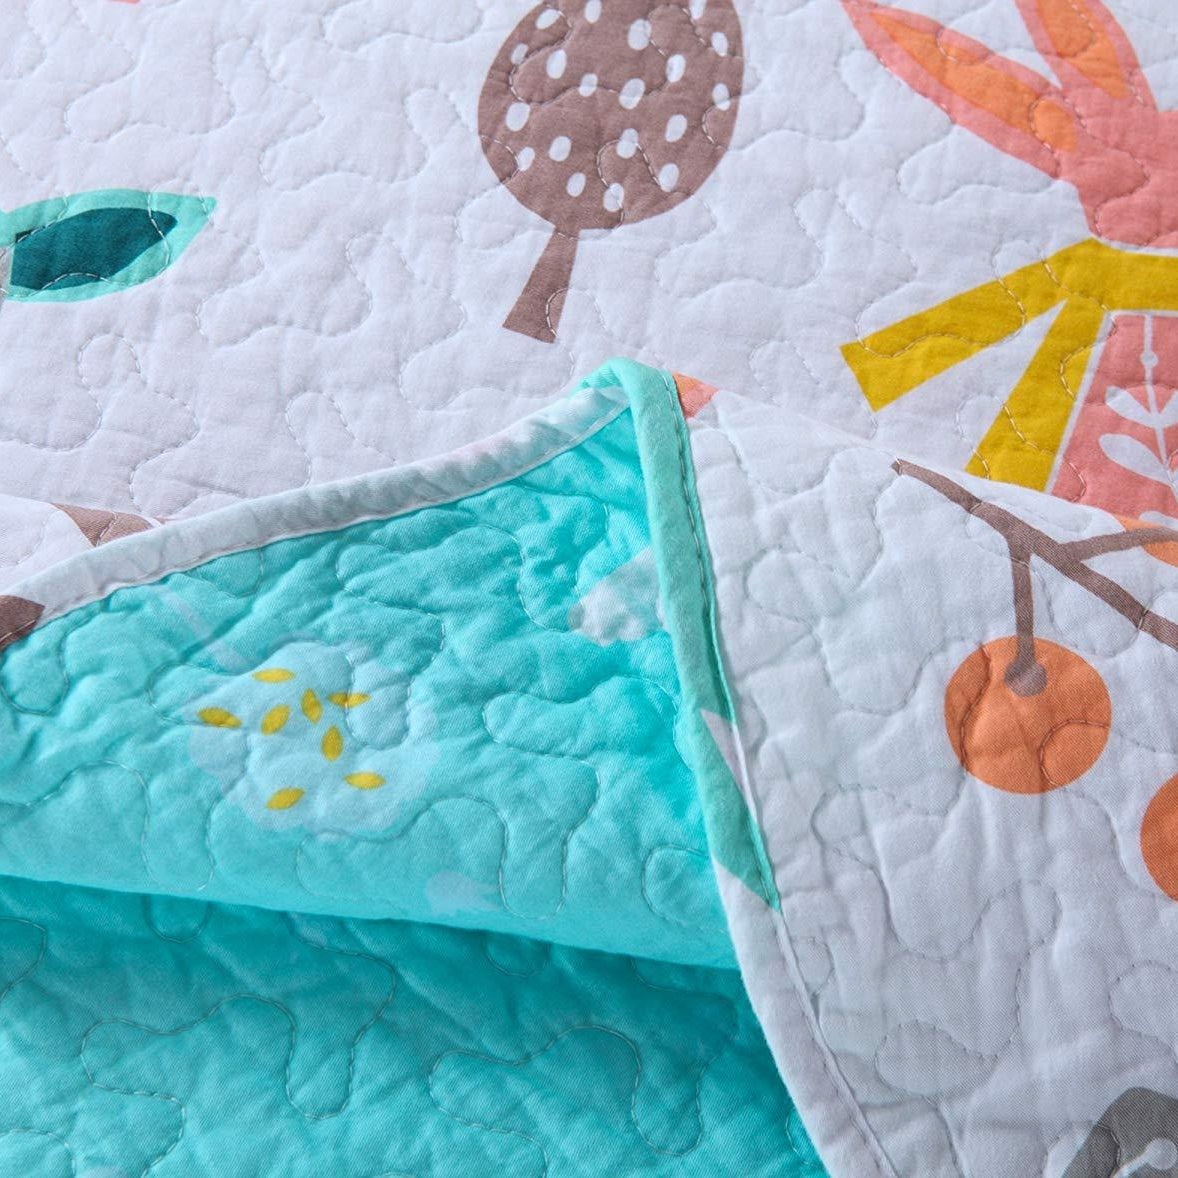 100% Cotton 2/3 Pcs Kids Quilt Bedspread Comforter Set for Teens Girls Teal Blue Forest Deer, XL1804